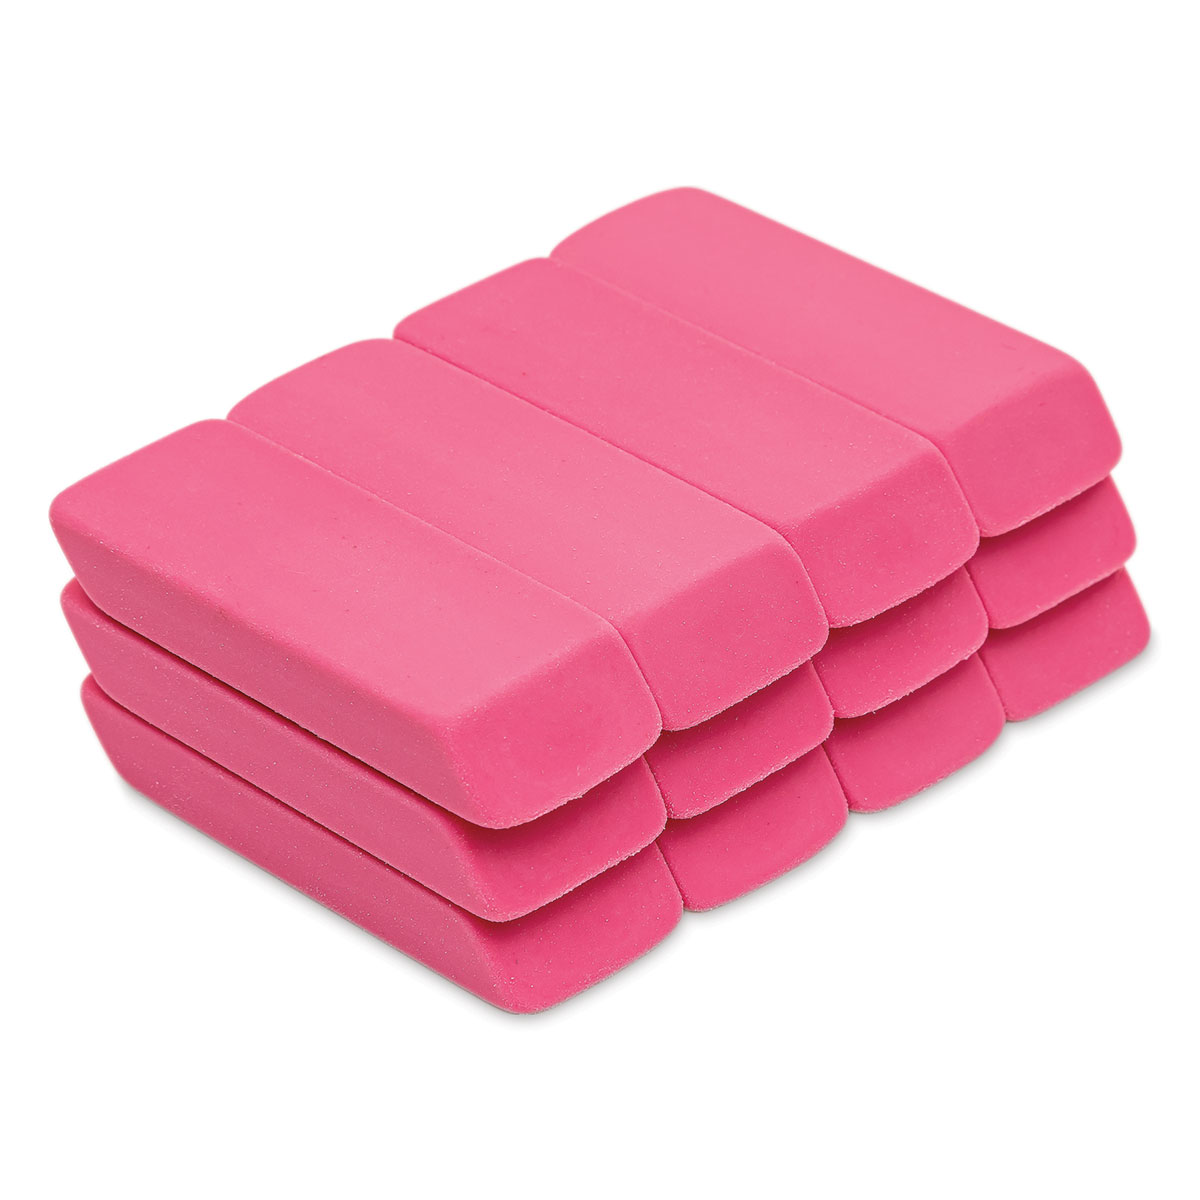 General's All-Art Pink Eraser 120-count Tub